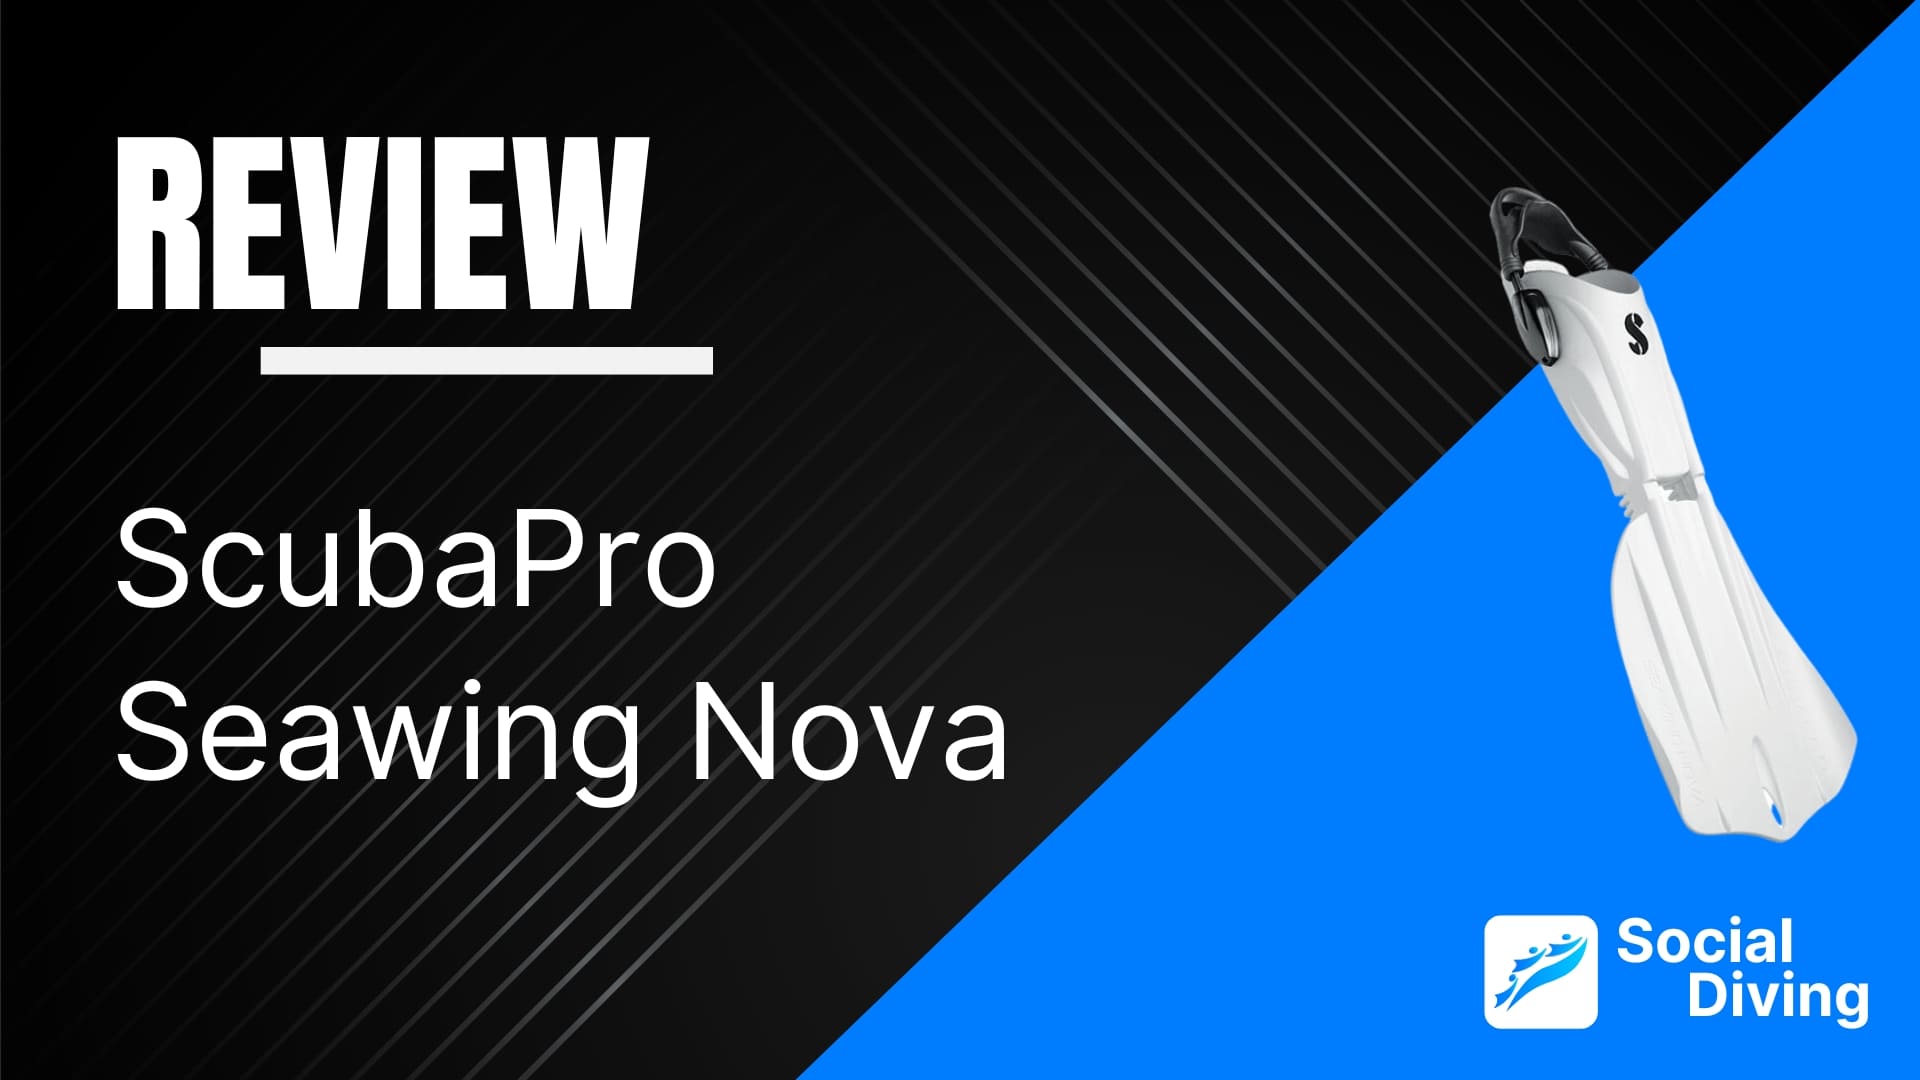 ScubaPro Seawing Nova review